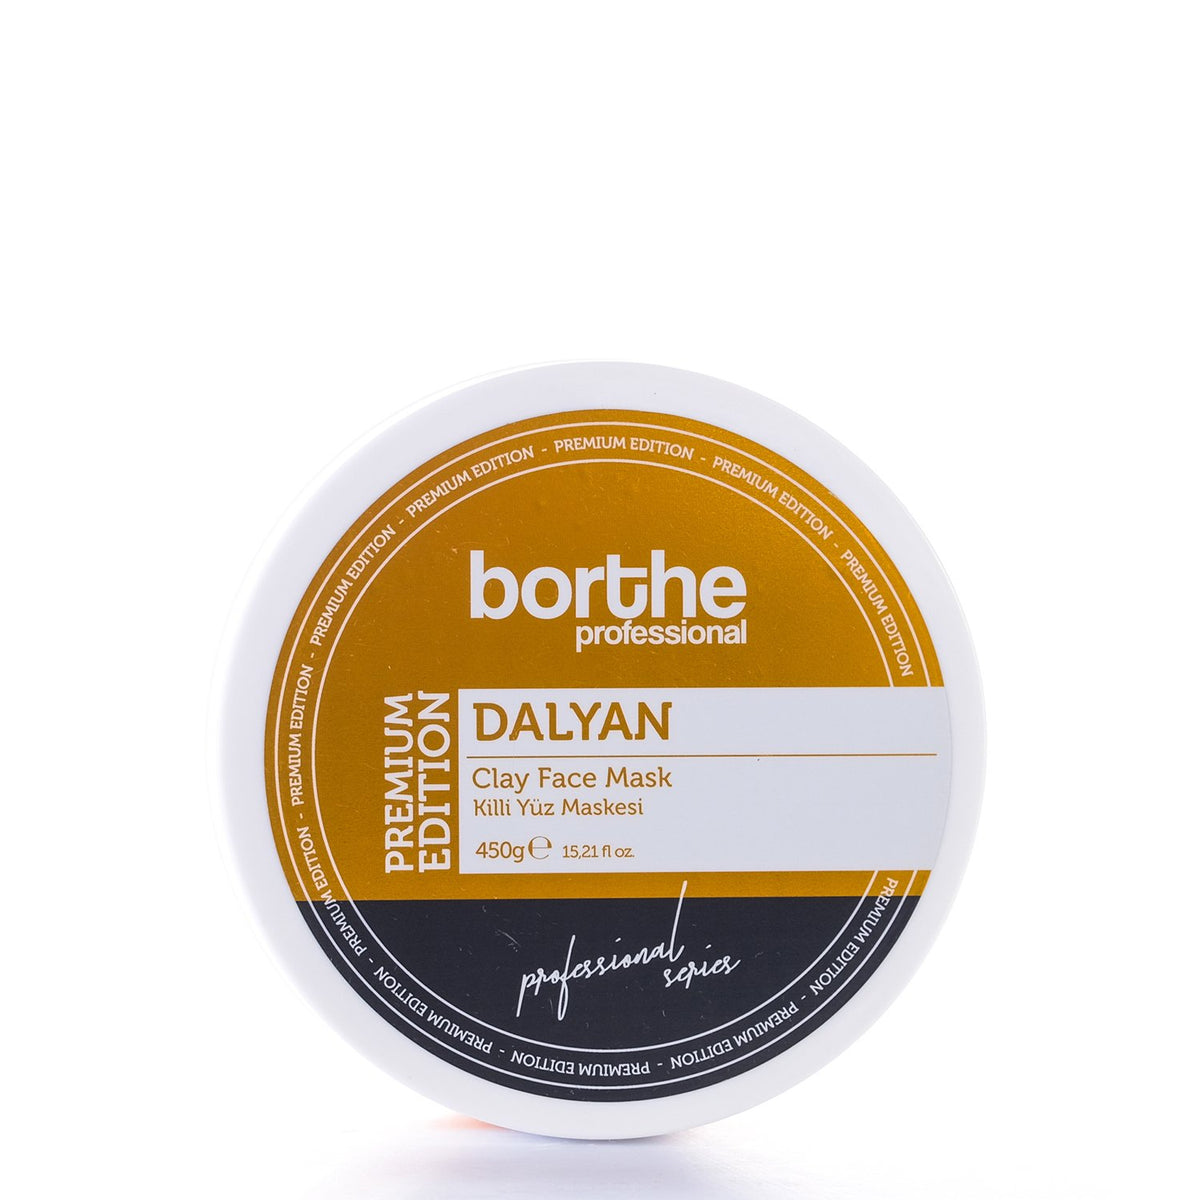 BORTHE Clay Face Mask Premium Edition (DALYAN) 450g